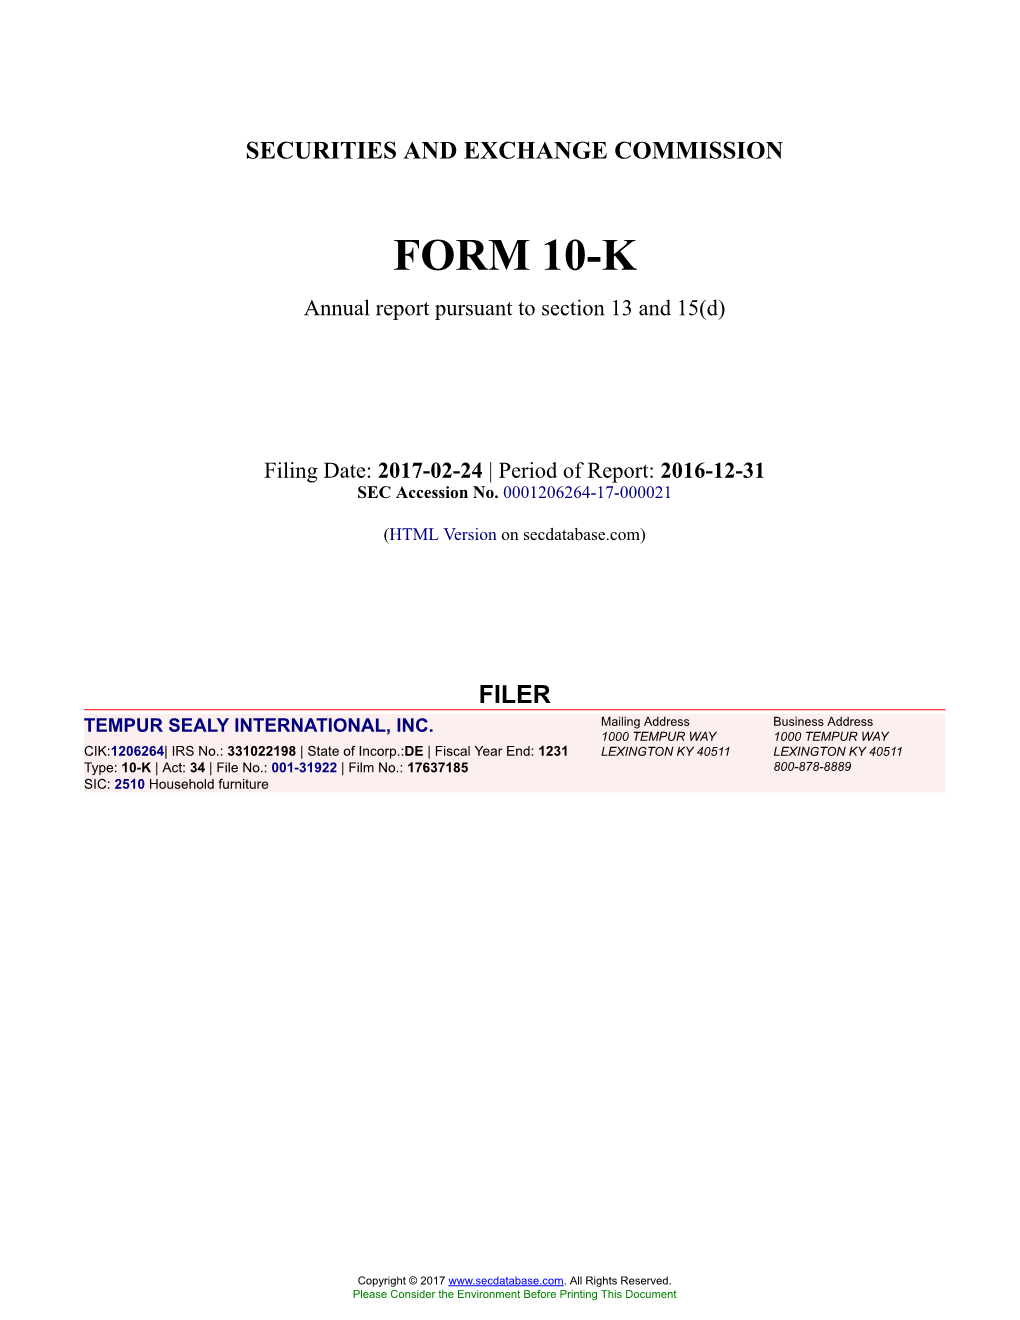 TEMPUR SEALY INTERNATIONAL, INC. Form 10-K Annual Report